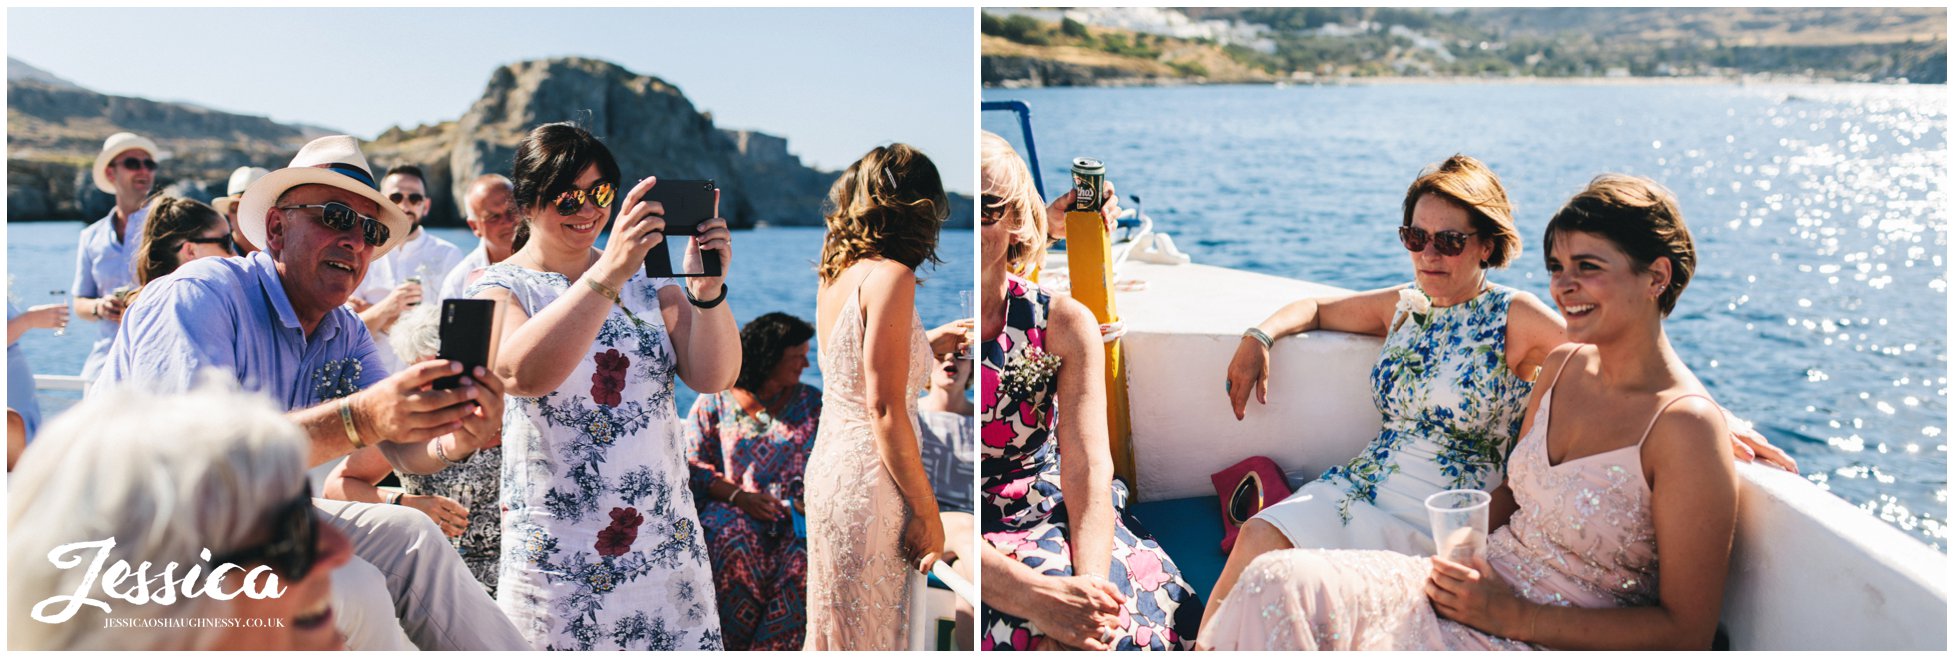 wedding guests enjoy the boat trip around st pauls bay